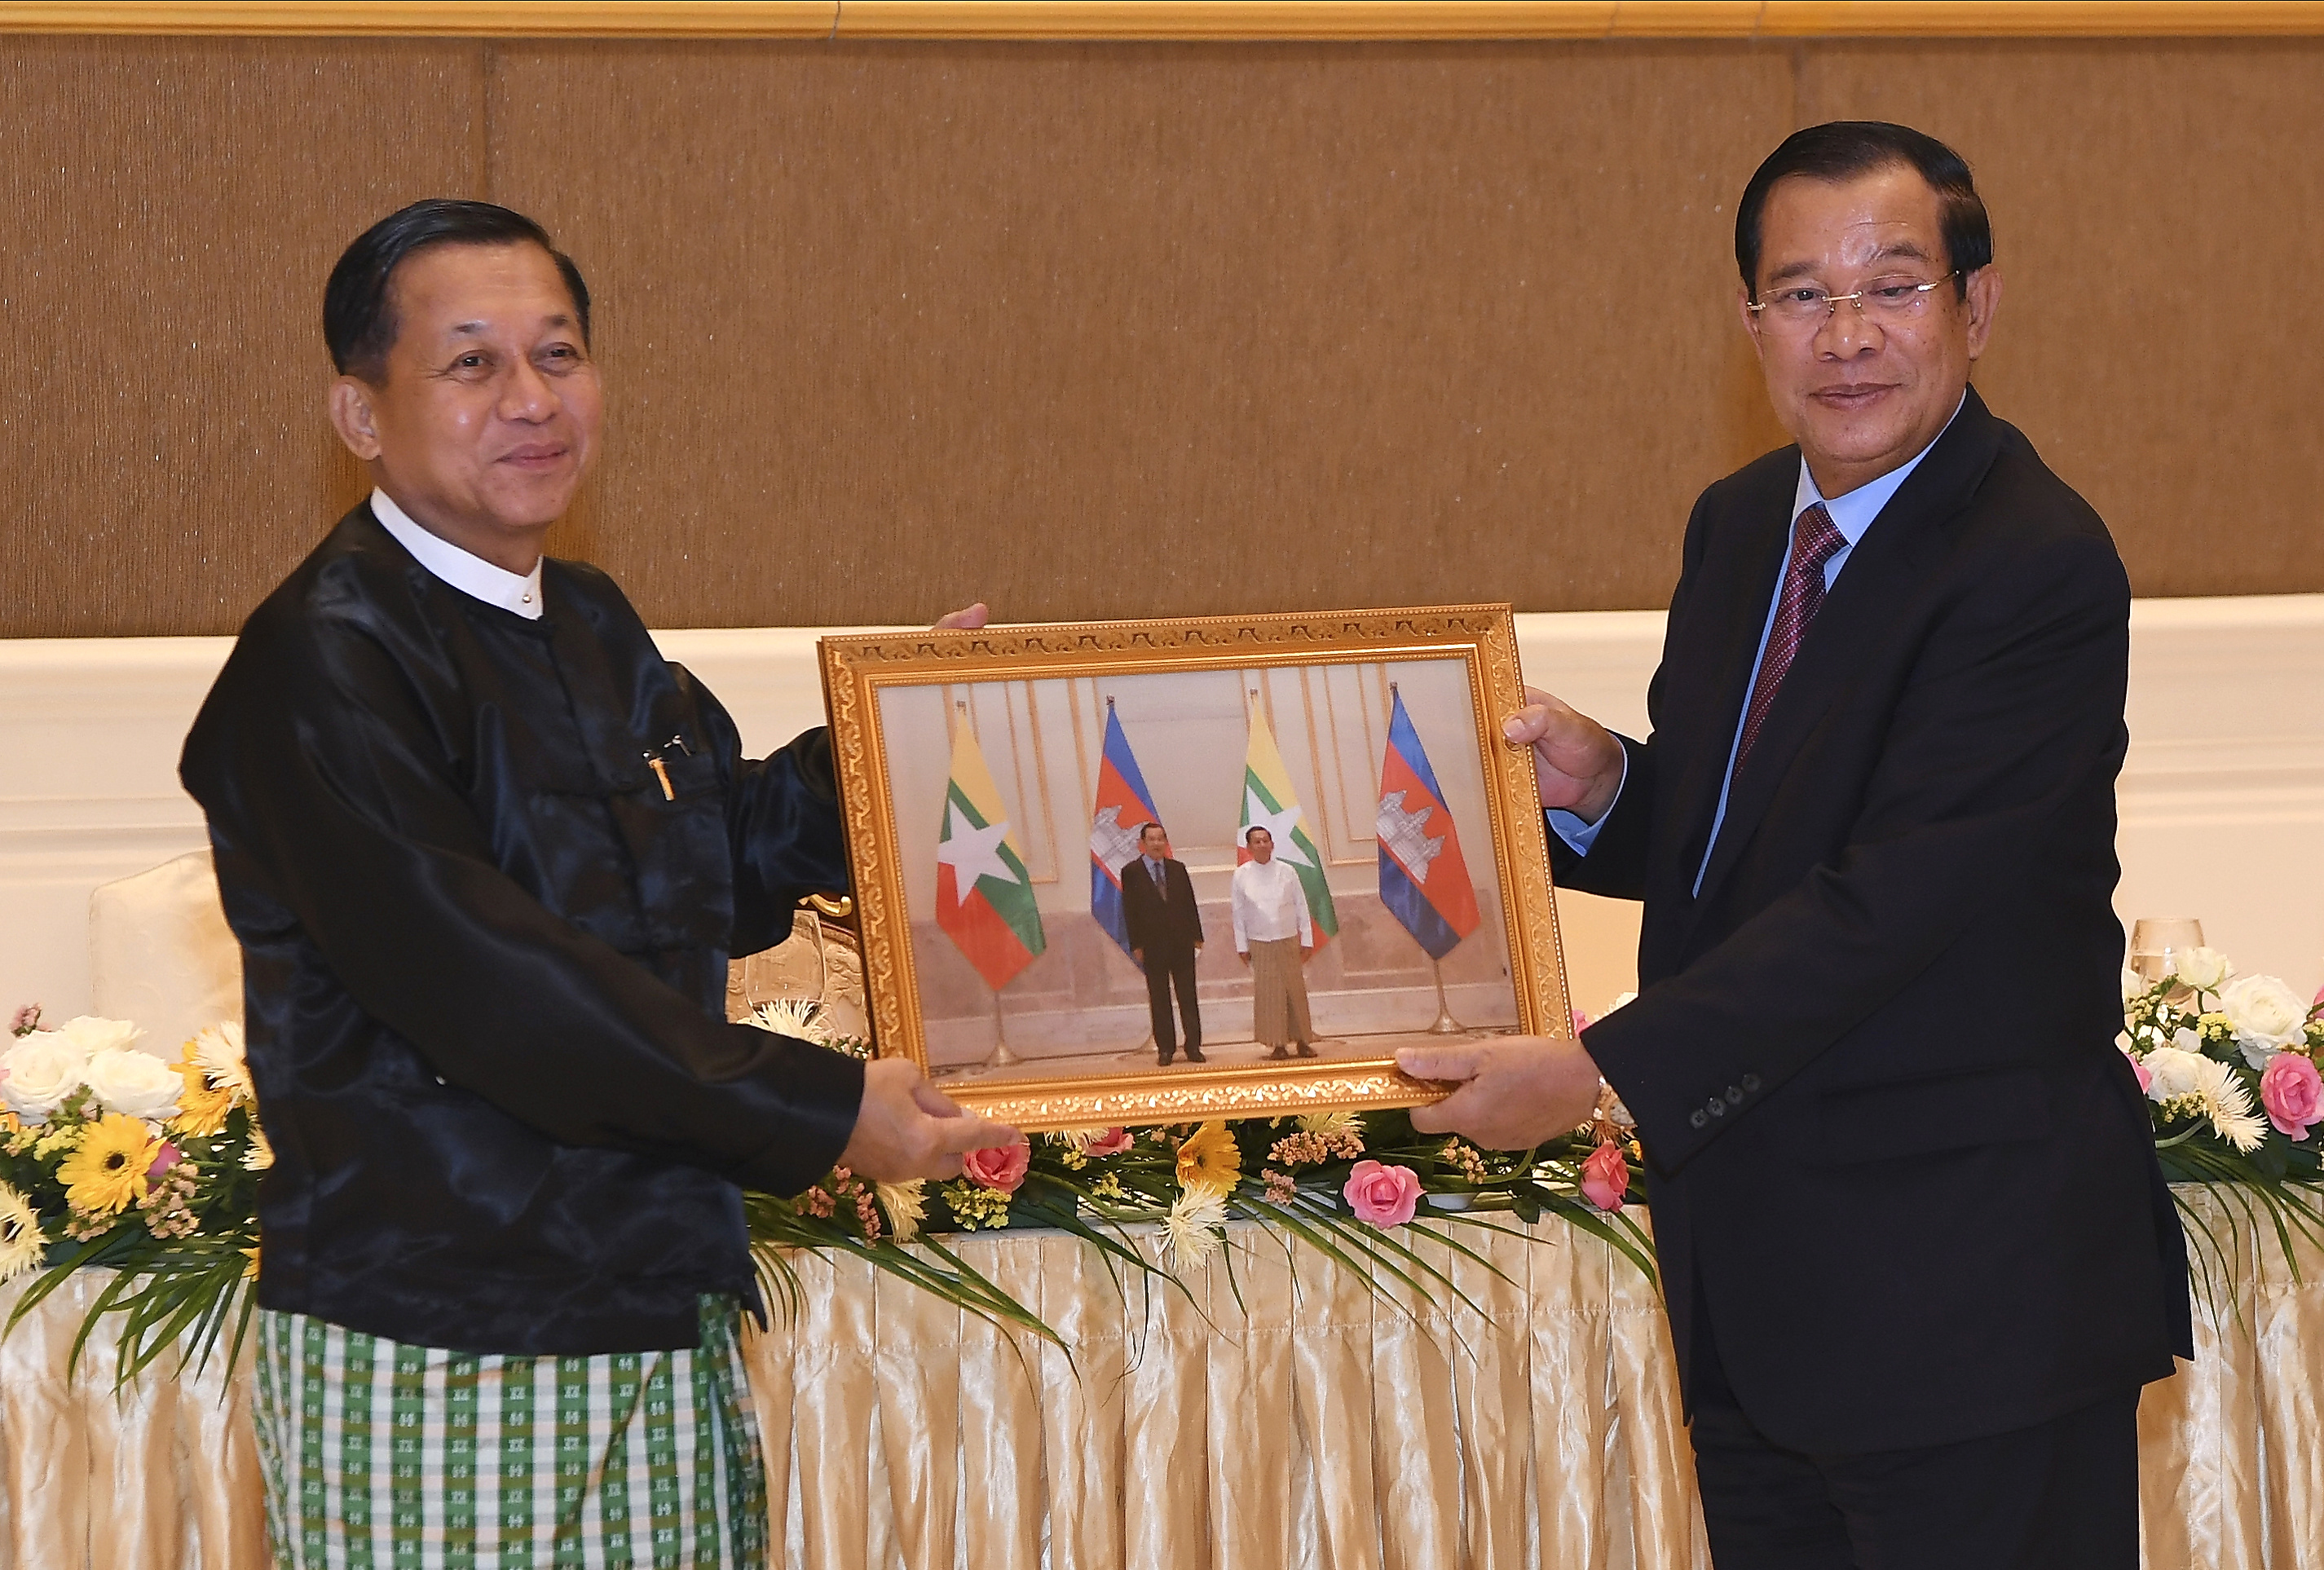 Hun Sen and Min Aung Hlaing met in Nay Pyi Taw